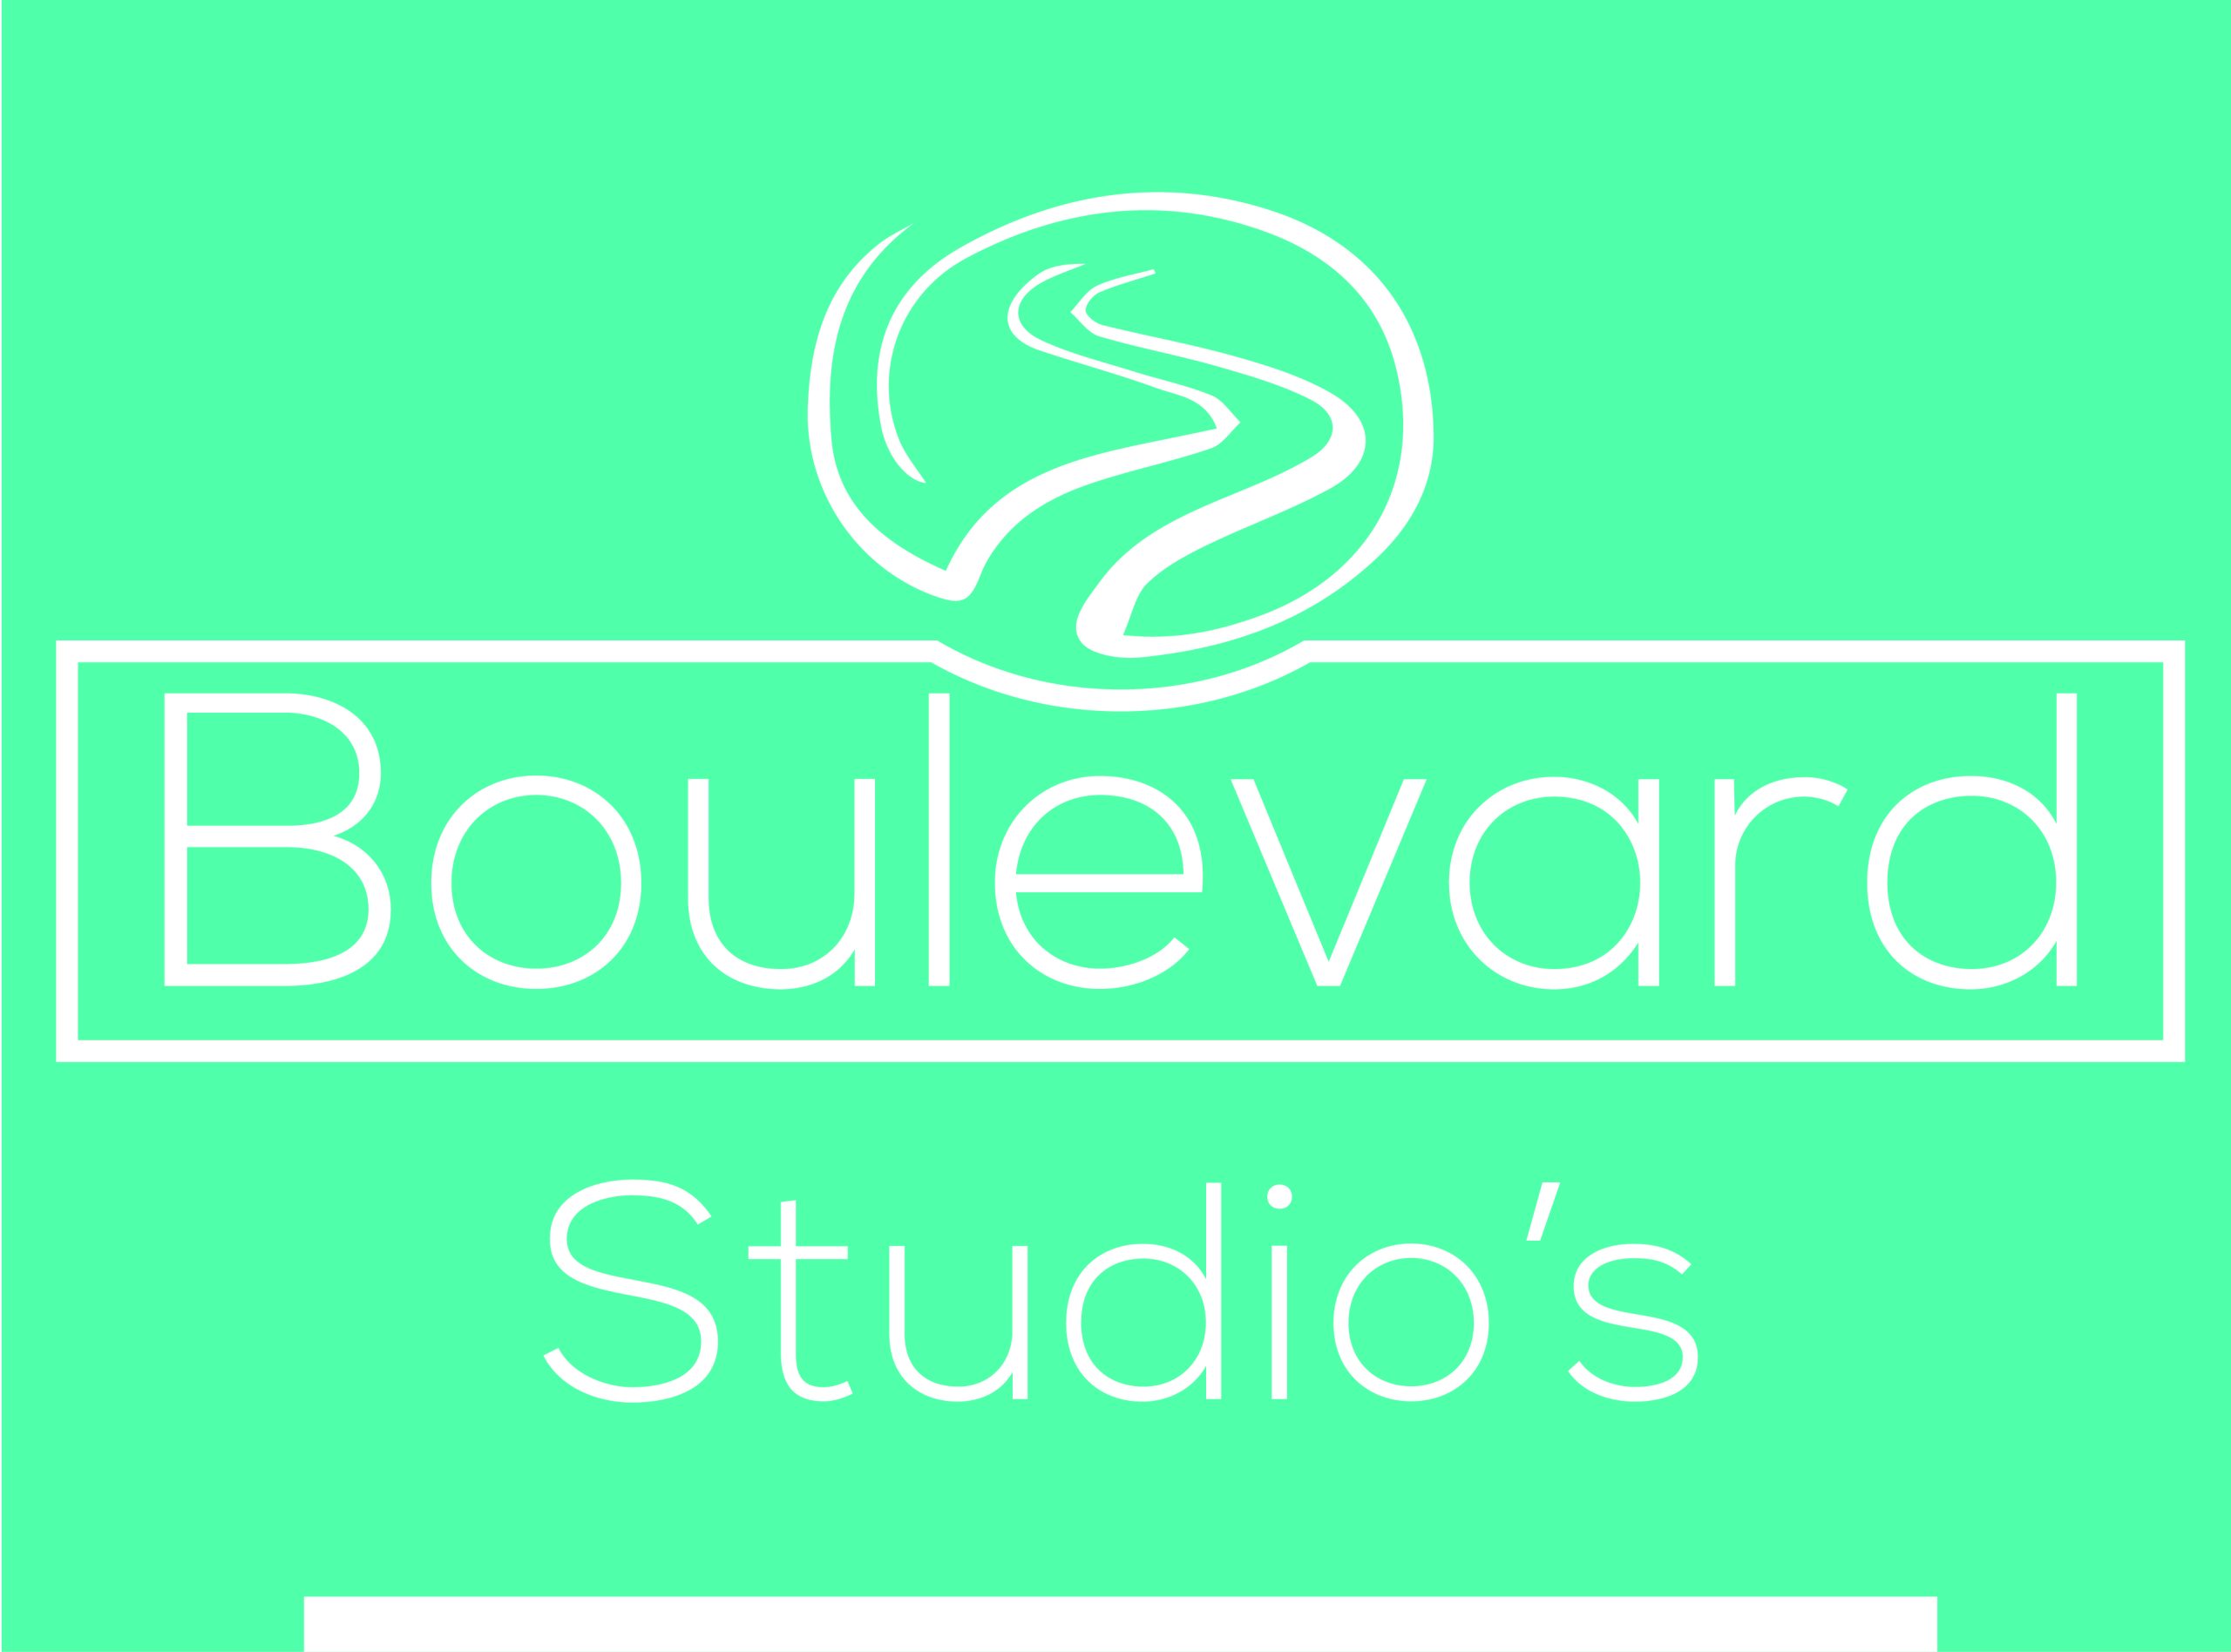 Boulevard Studios